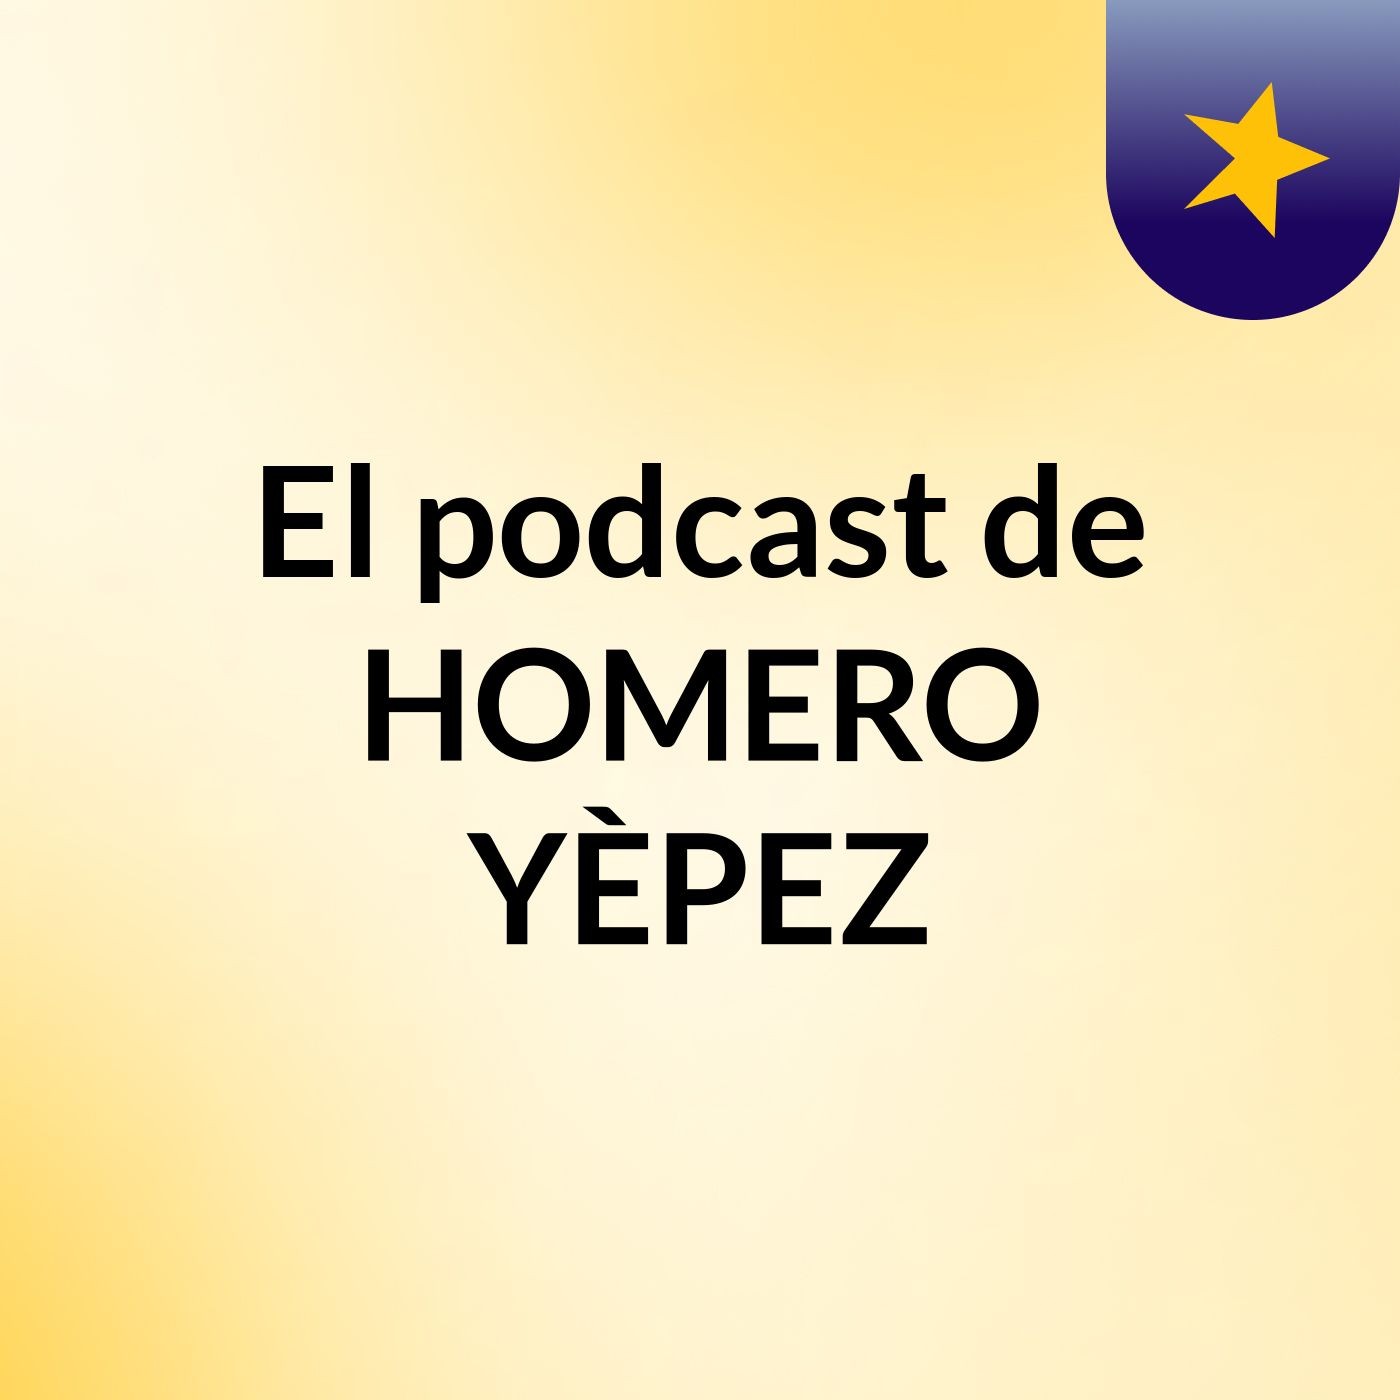 Episodio 9 - El podcast de HOMERO YÈPEZ